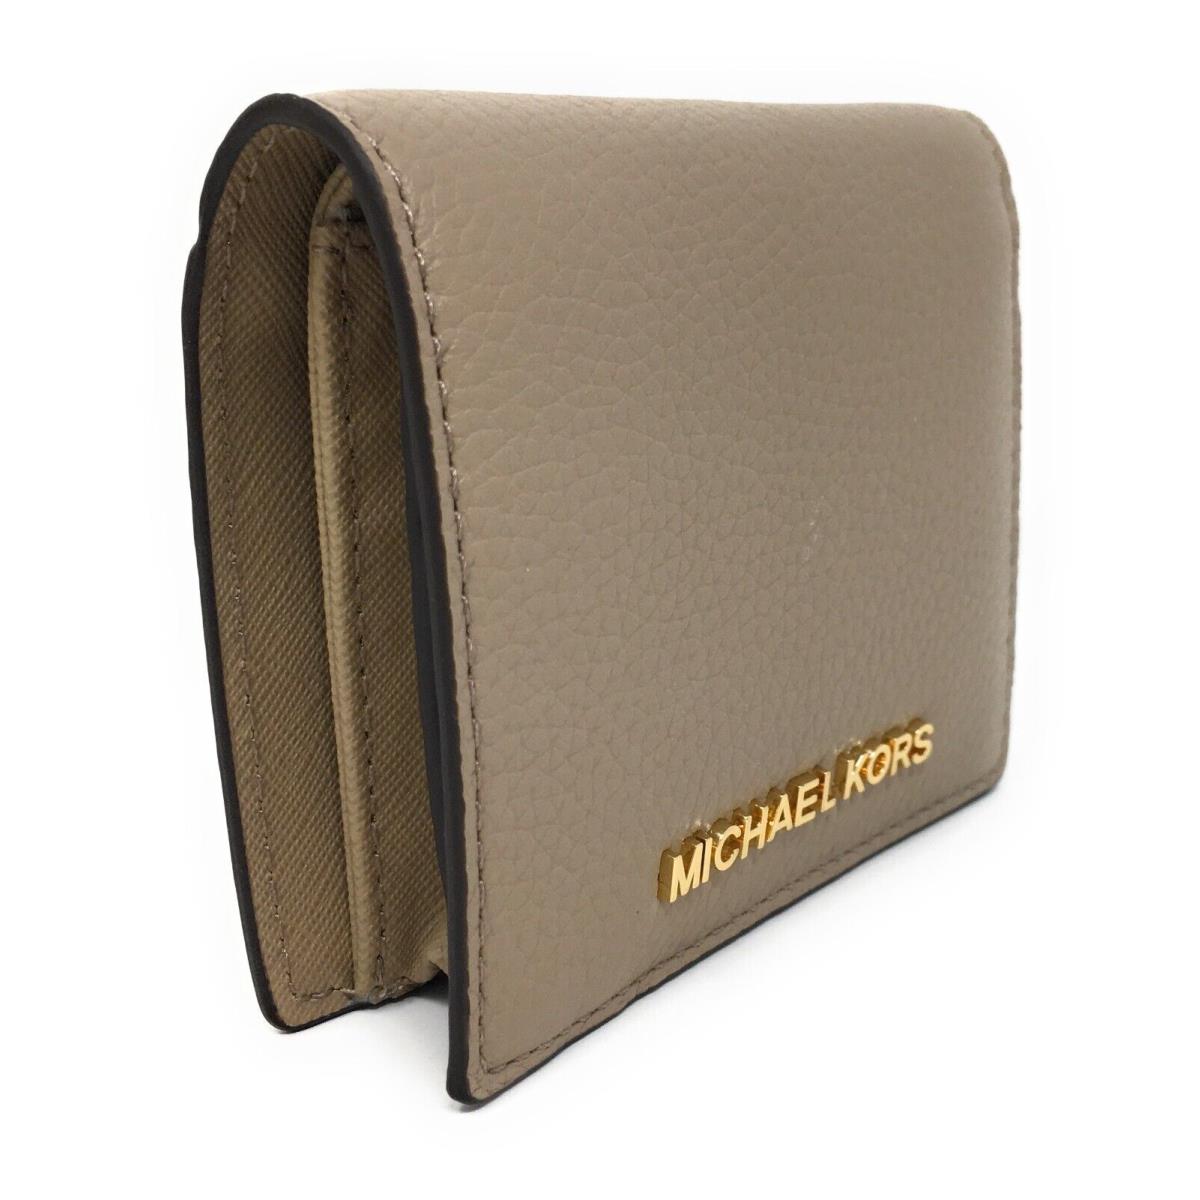 Michael Kors Jet Set Travel Medium Leather Card Case Wallet: Truffle